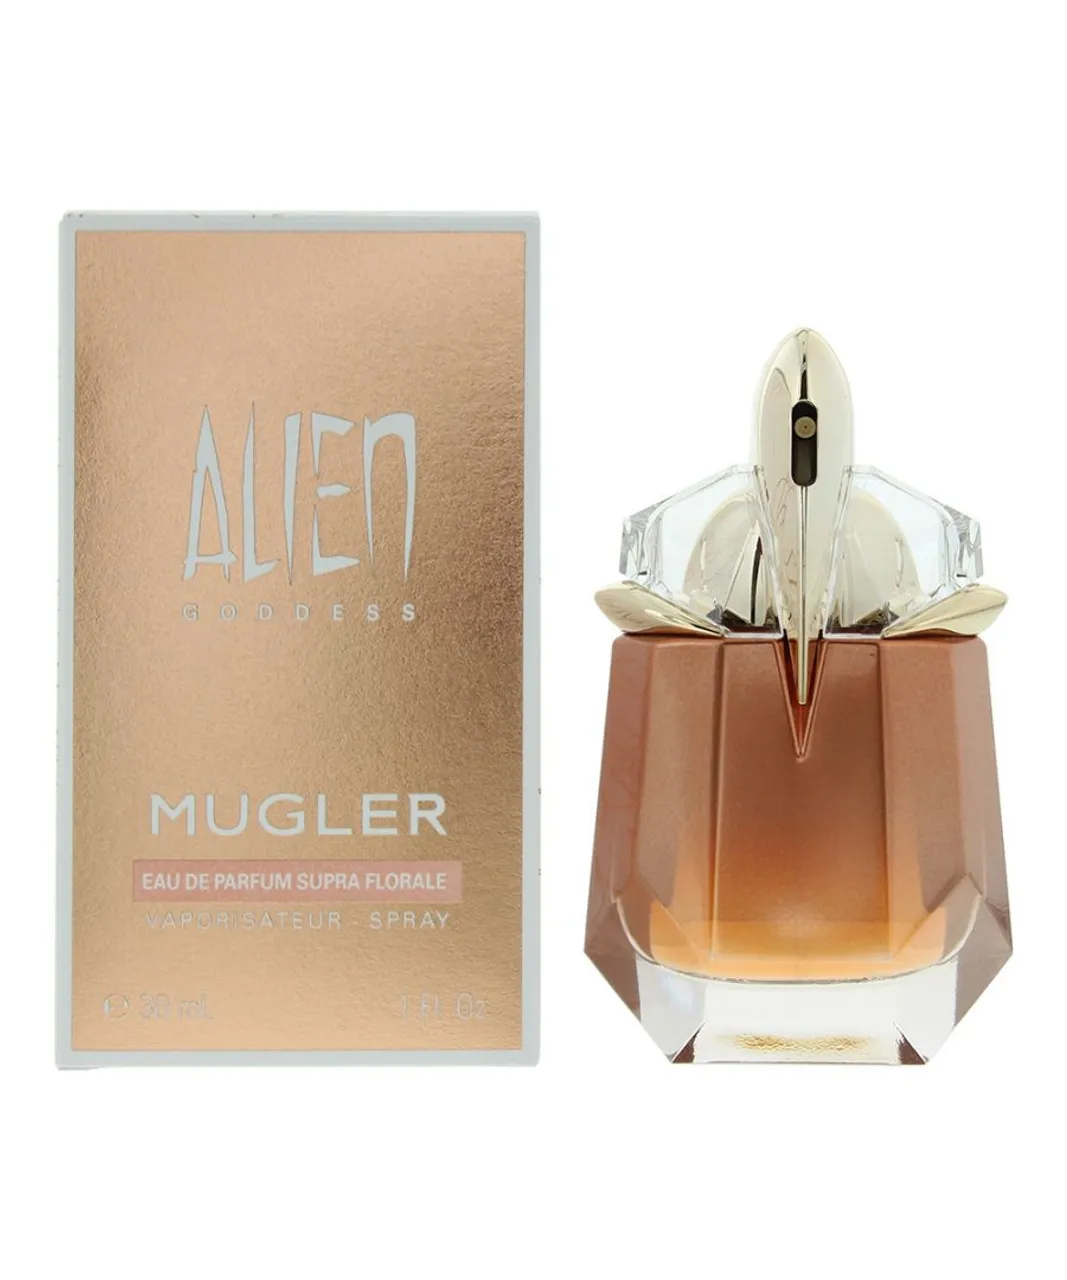 Mugler Womens Alien Goddess Supra Florale Eau de Parfum 30ml Spray for Her - One Size